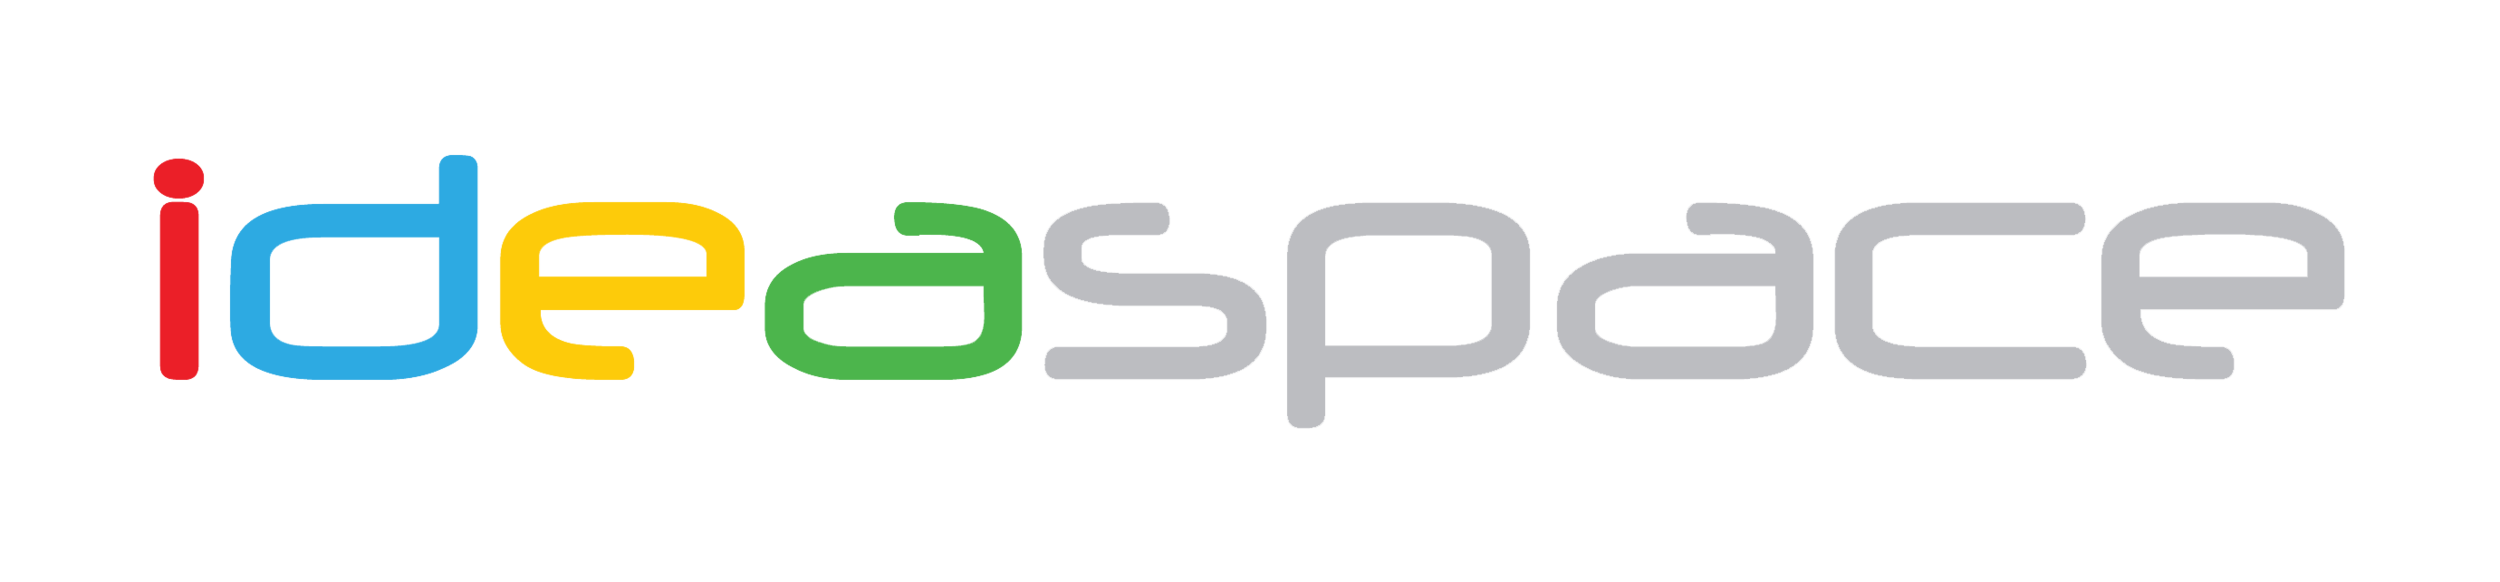 IdeaSpace Logo.png